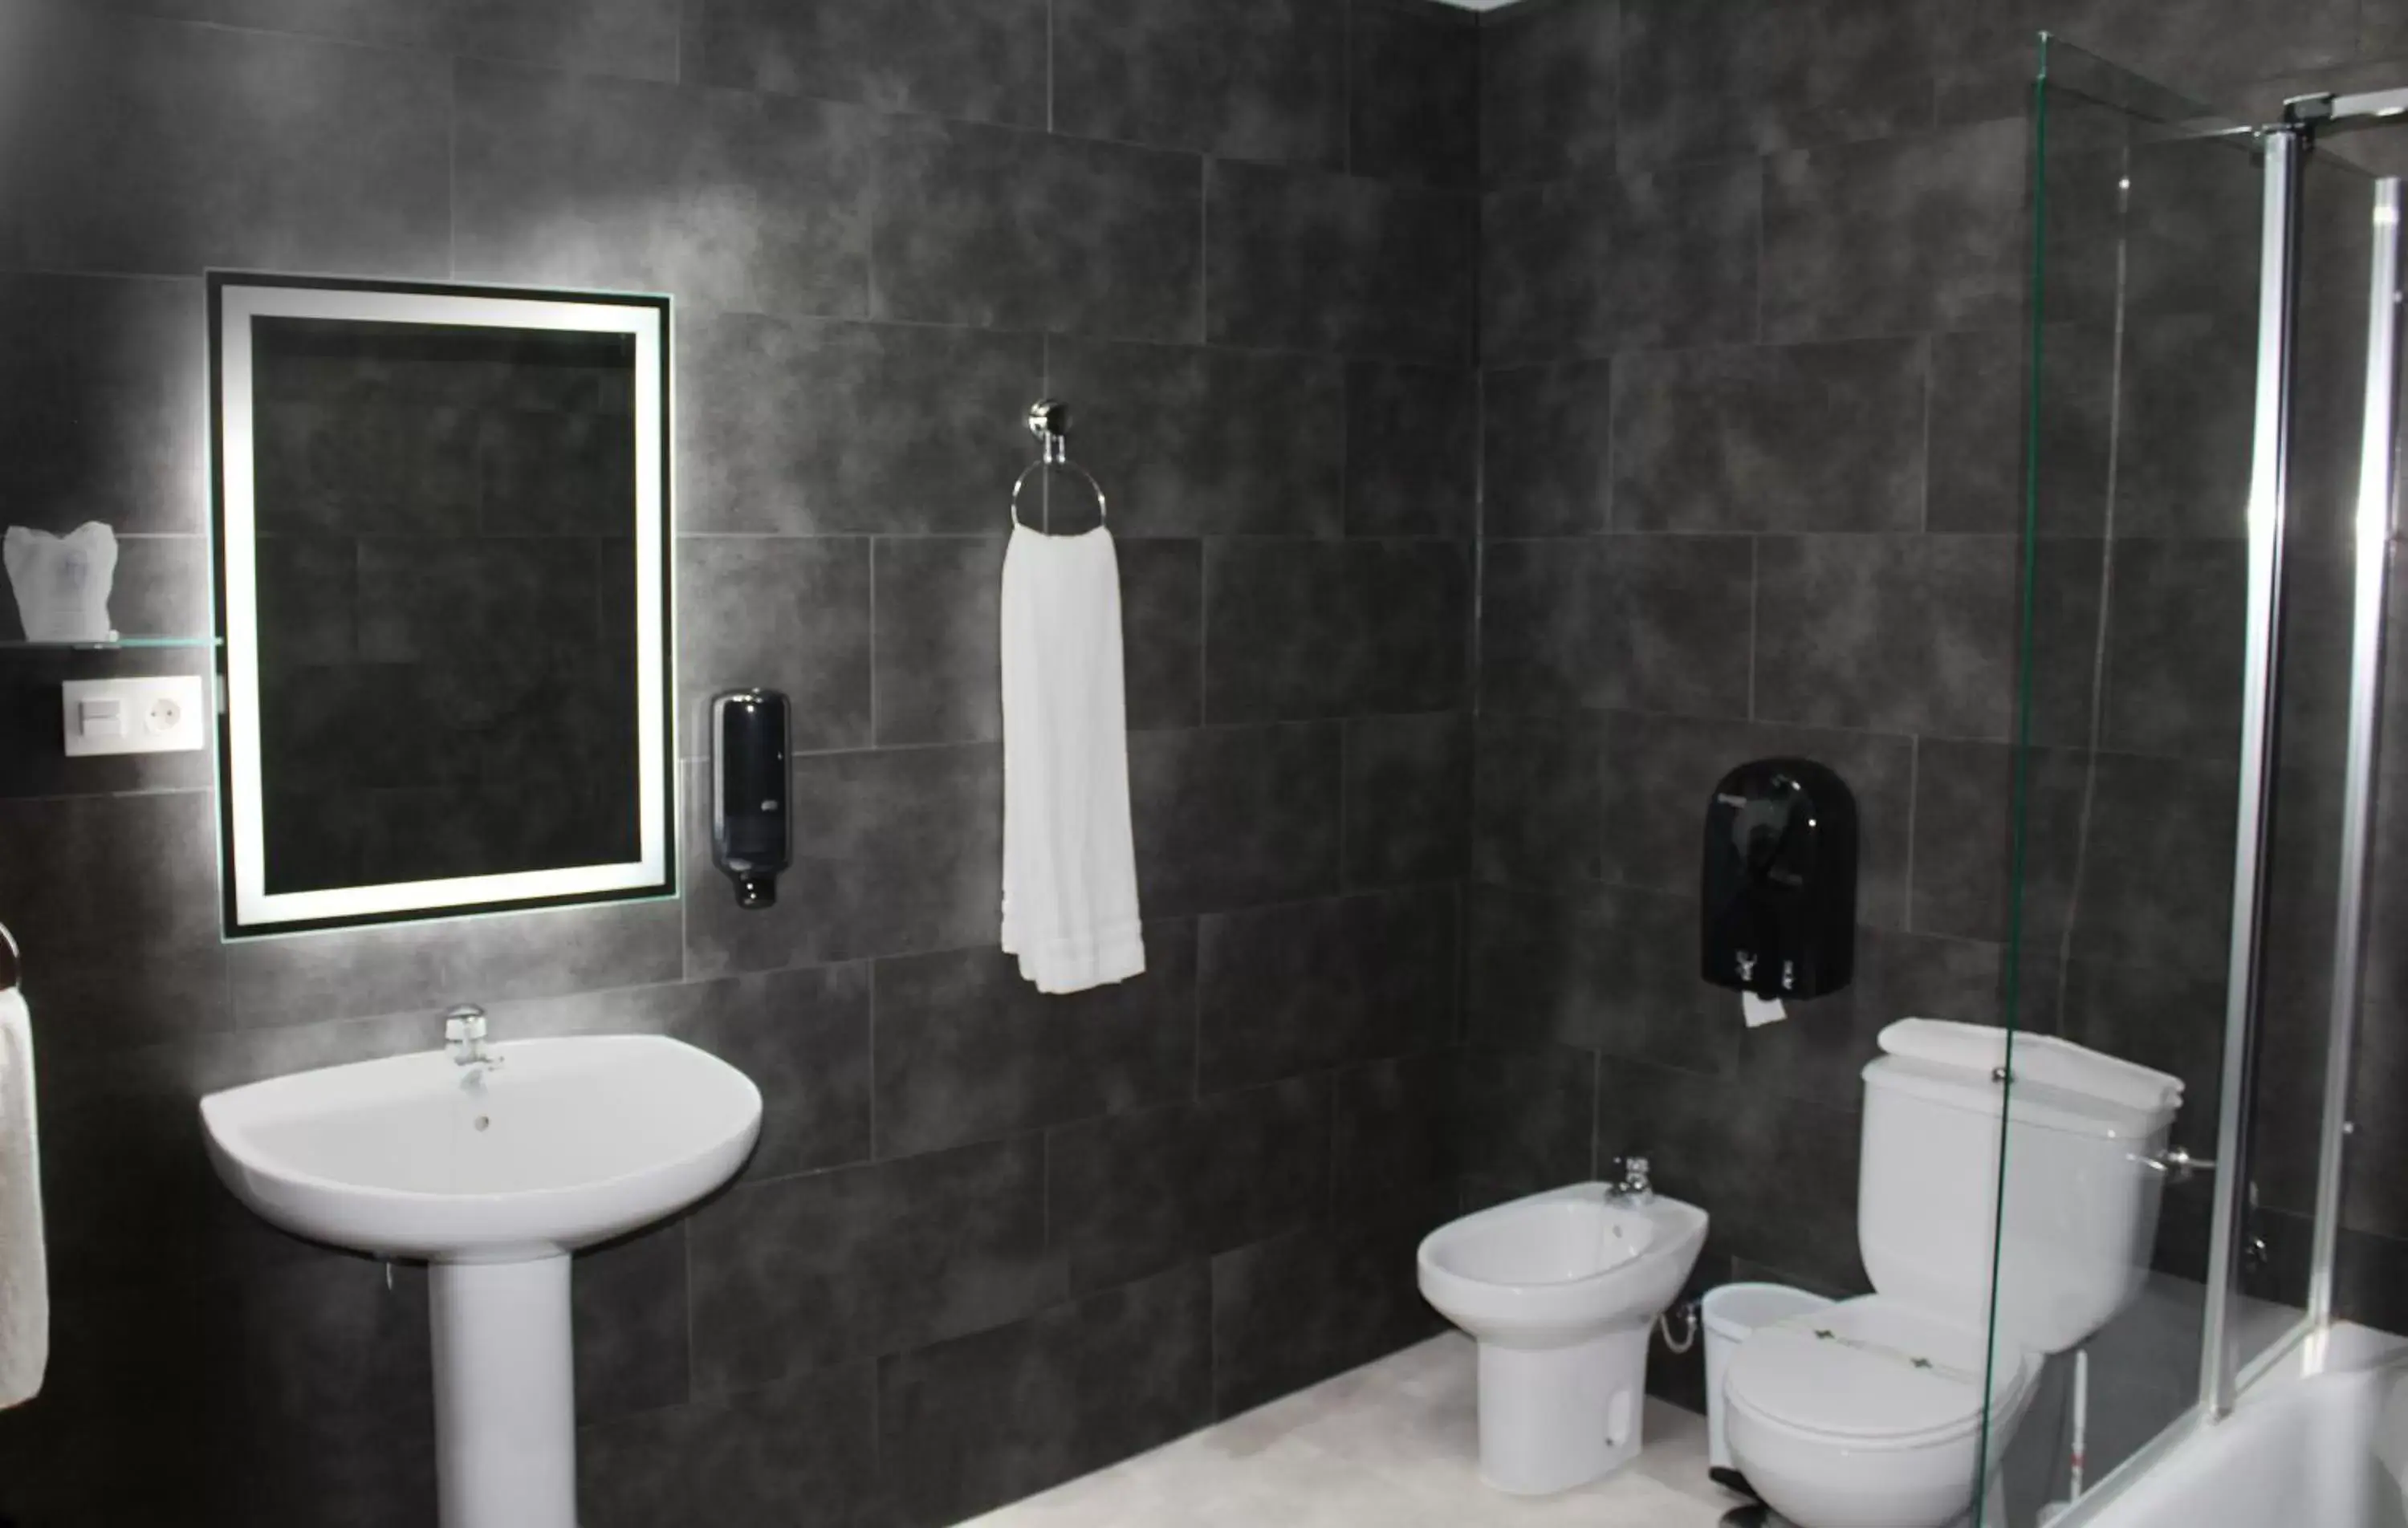 Photo of the whole room, Bathroom in Hotel Manzanito